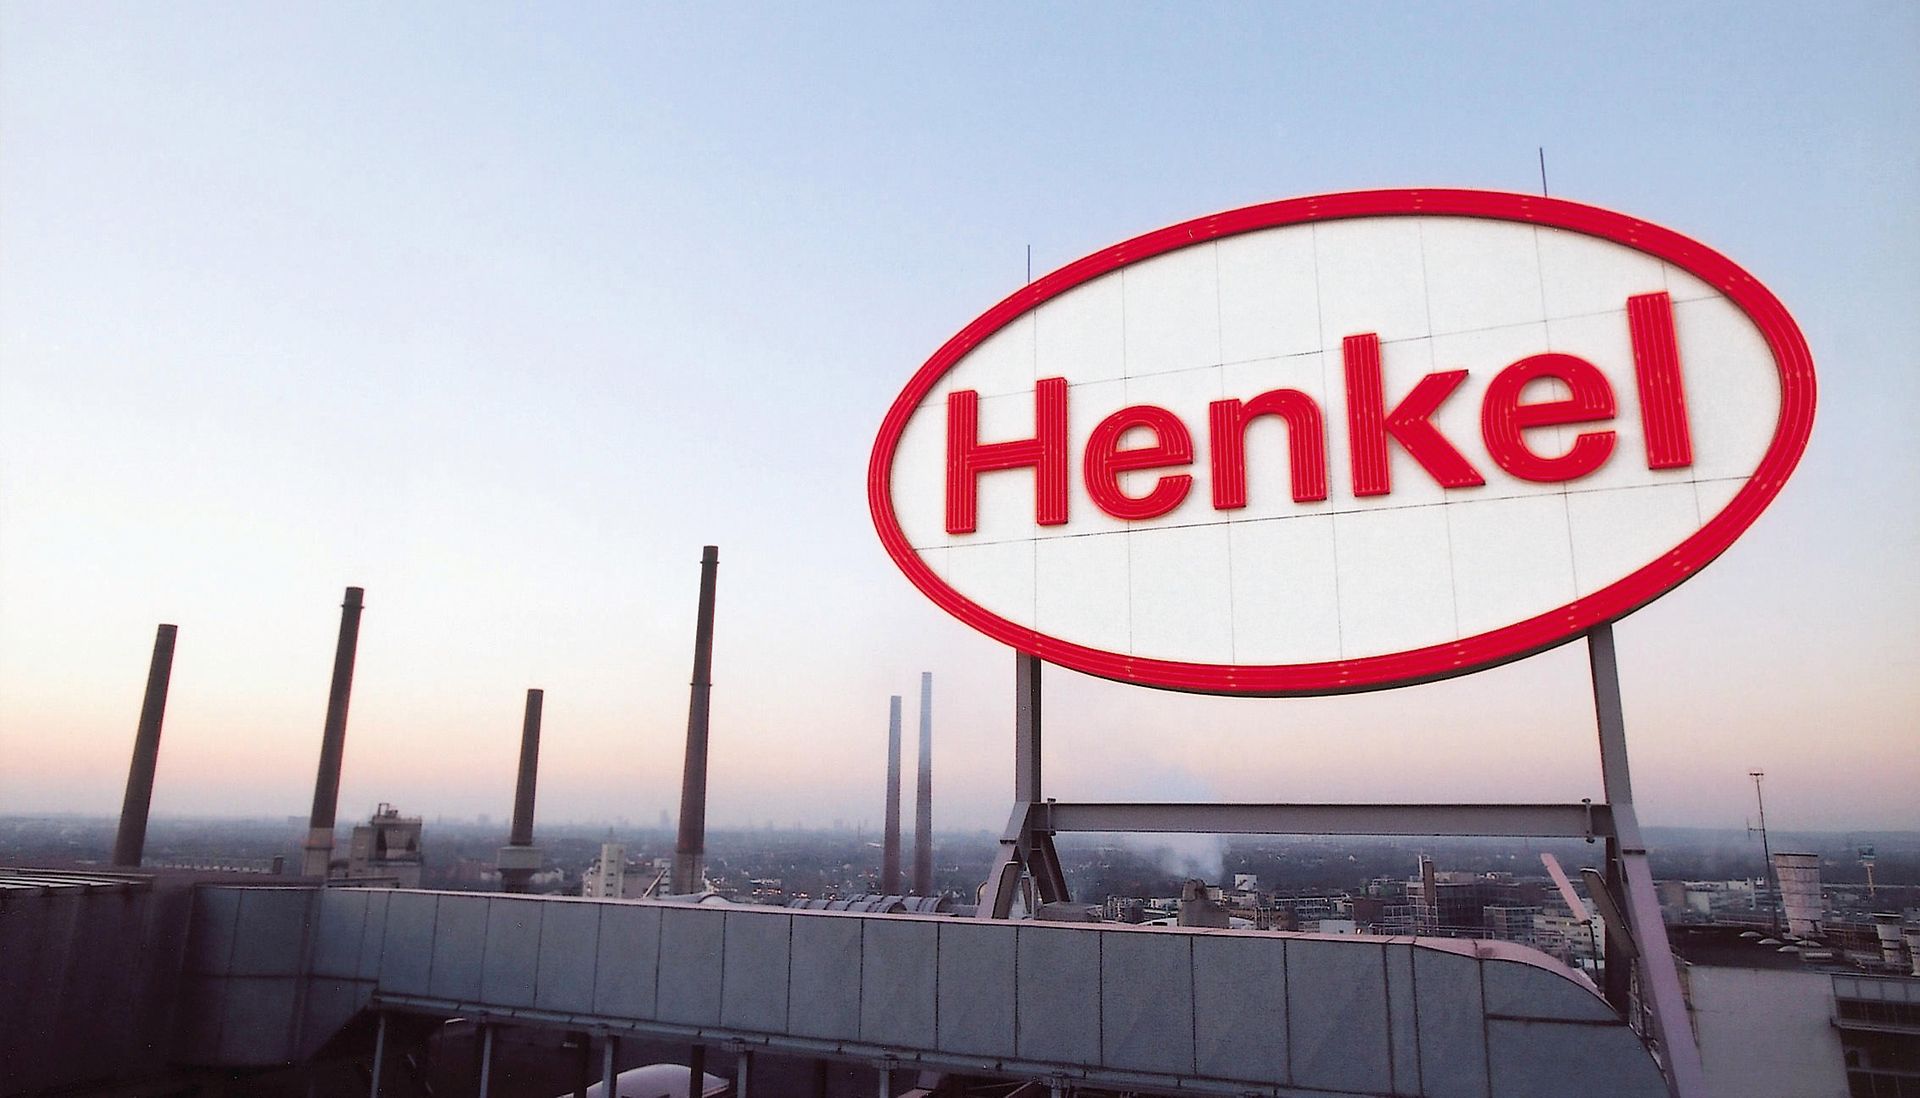 Henkel logo on a rooftop in Duesseldorf.